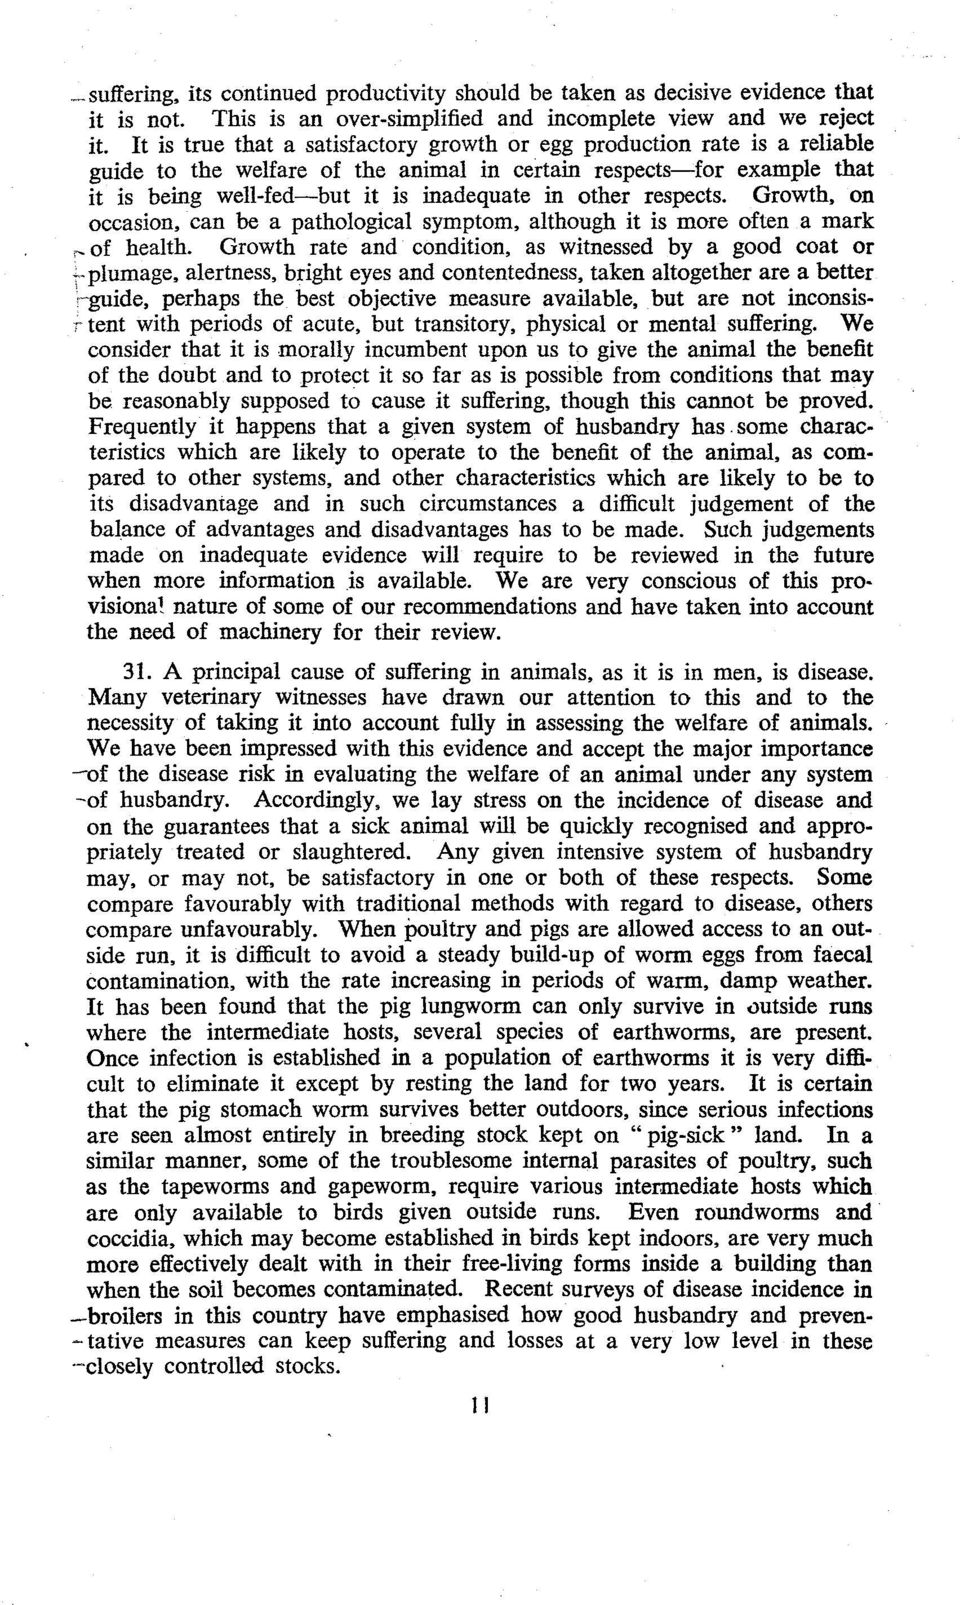 brambell report 1965 pdf